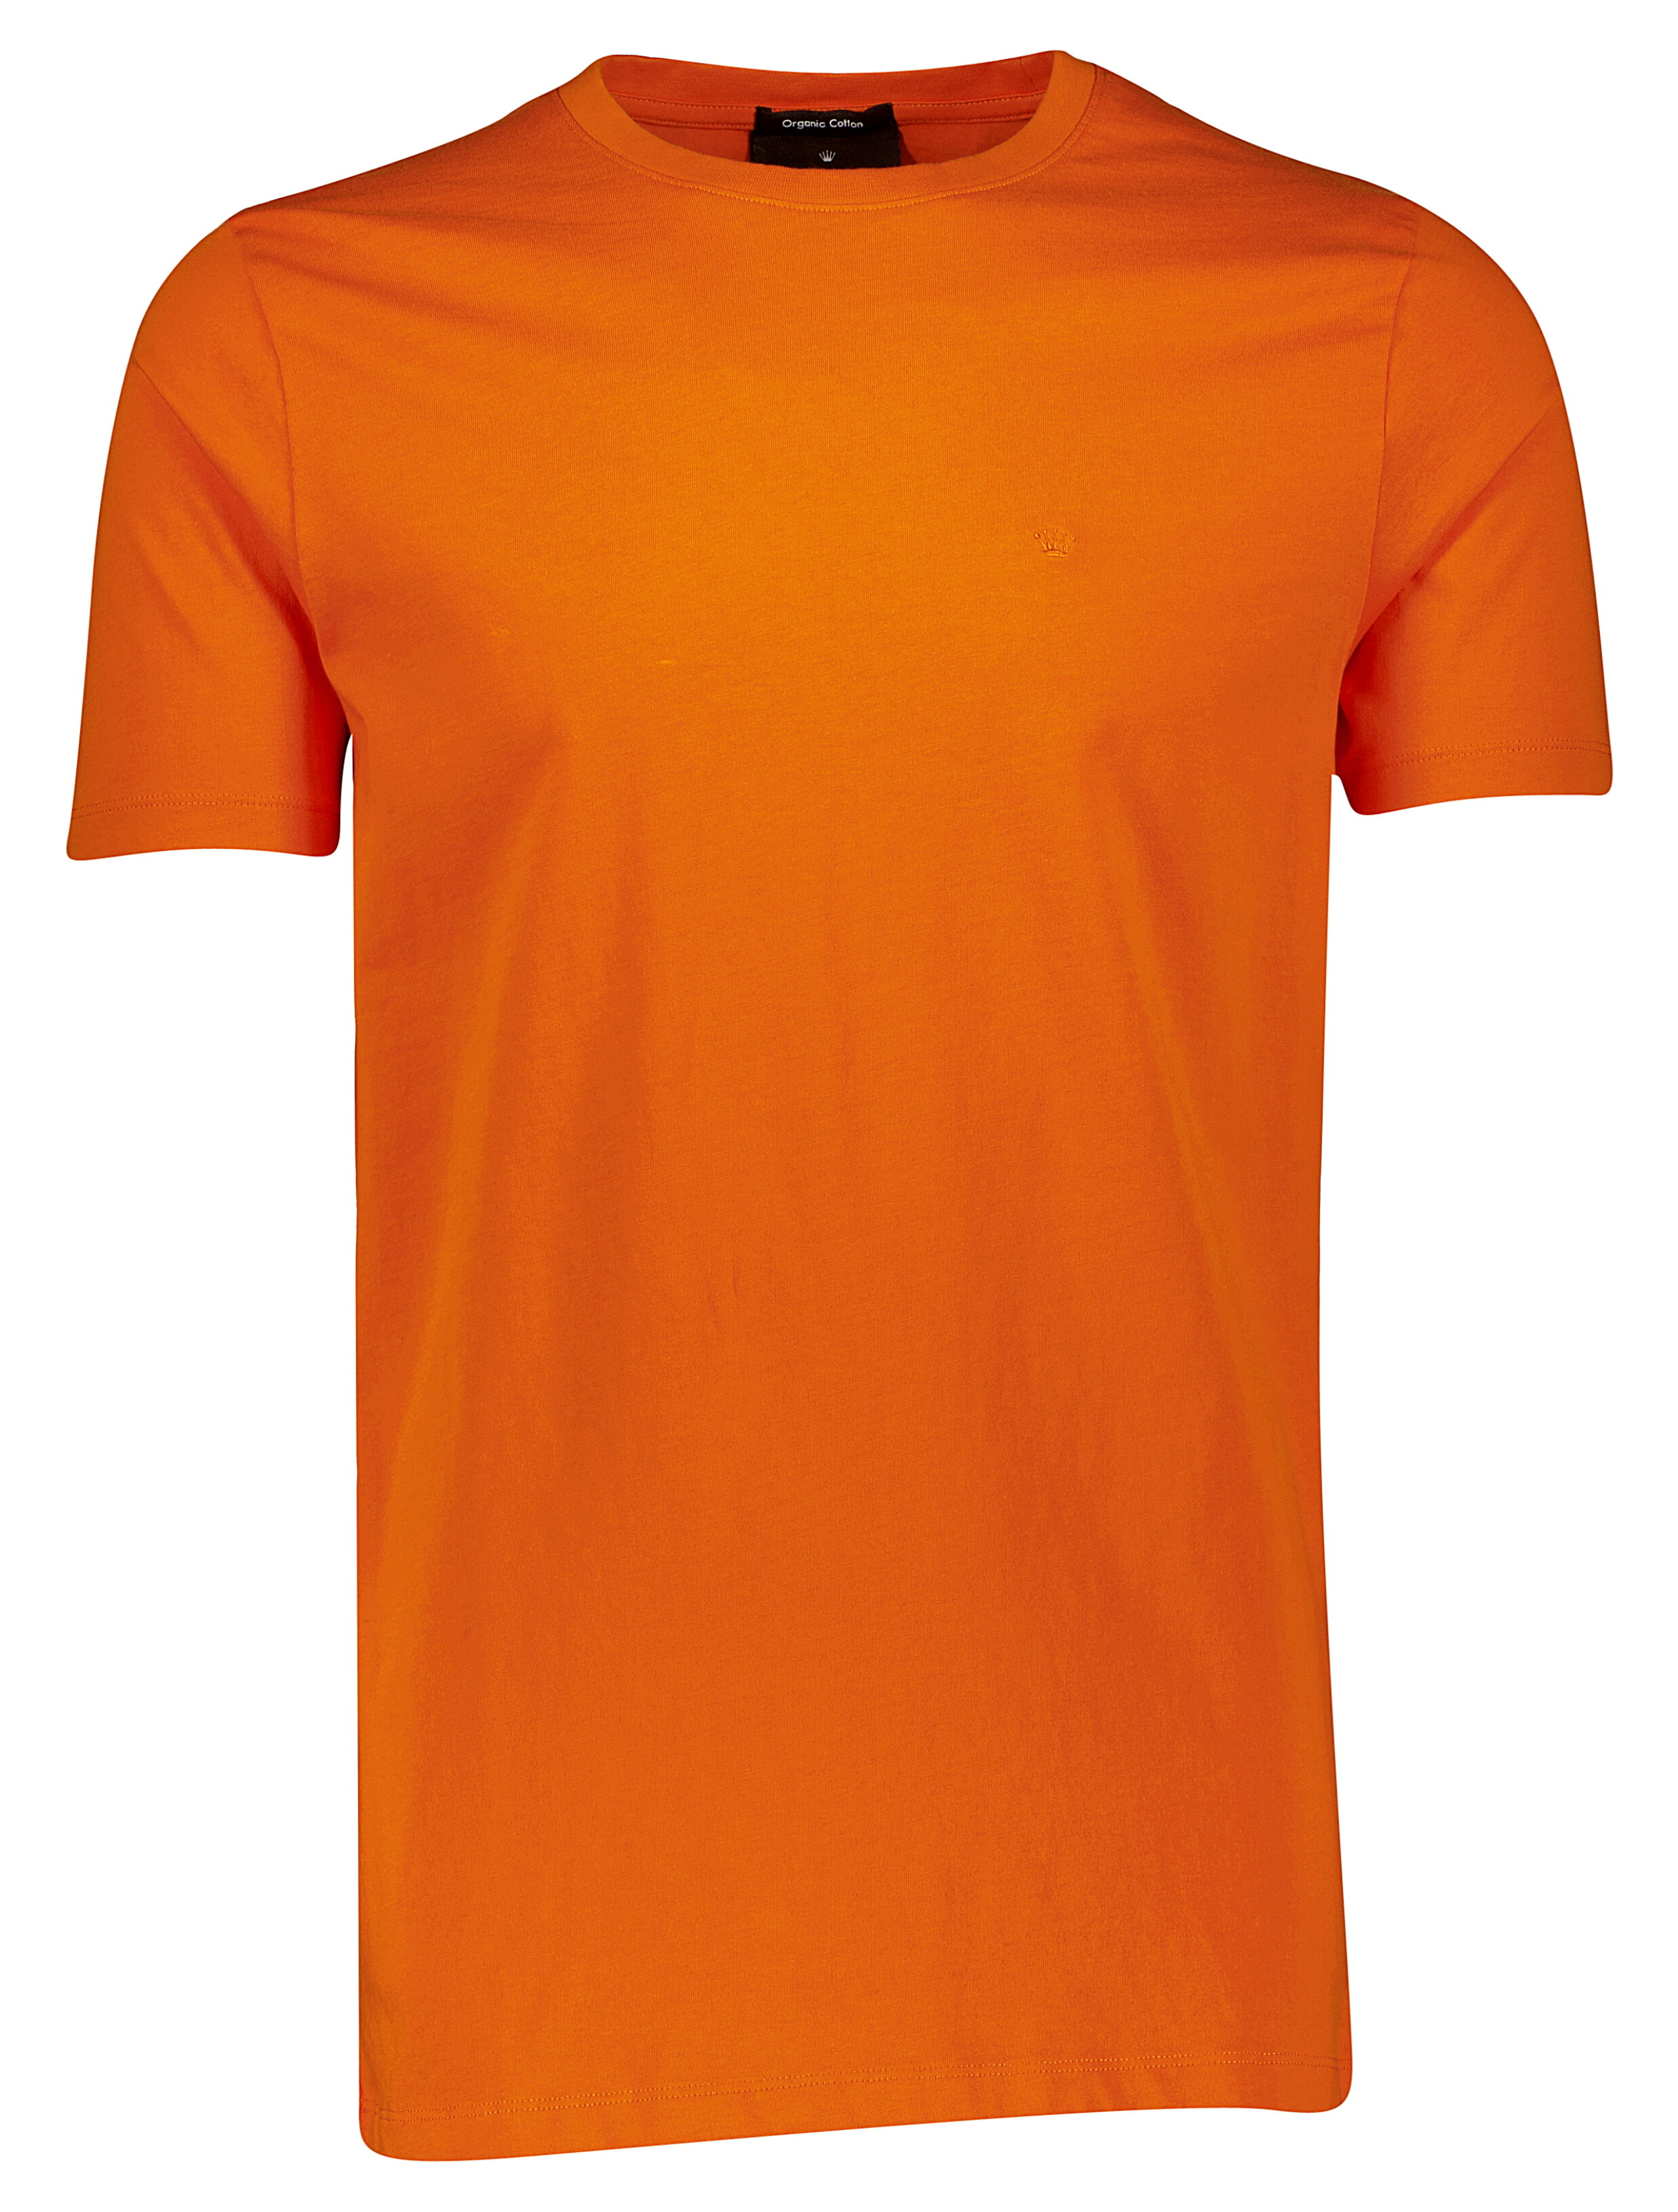 Junk de Luxe T-shirt orange / bright orange